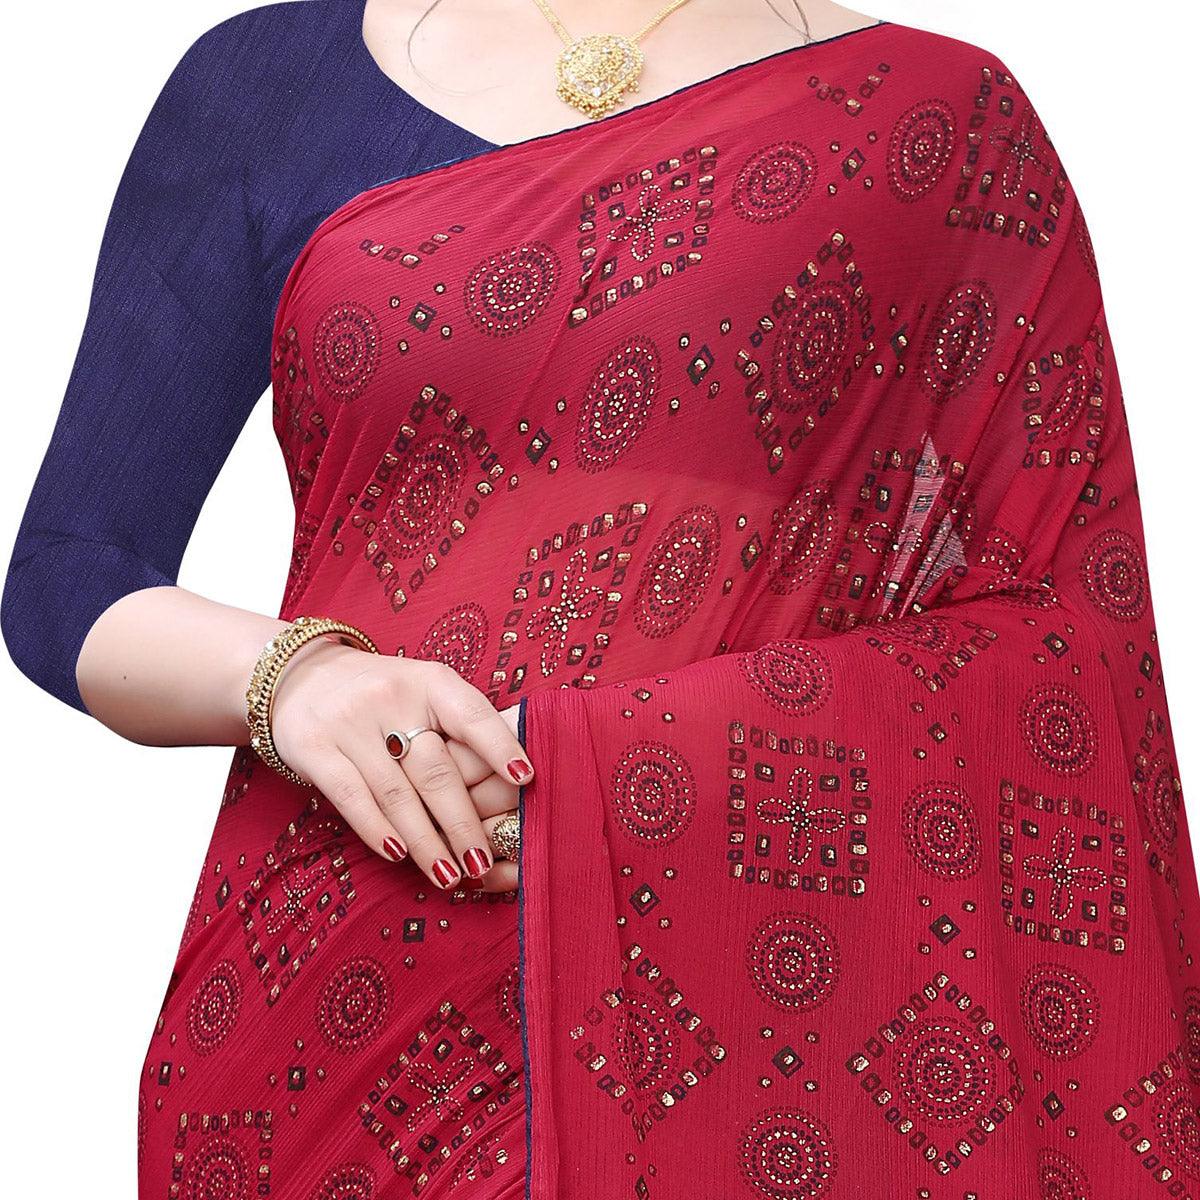 Innovative Red Colored Casual Wear Printed Art Silk Saree - Peachmode